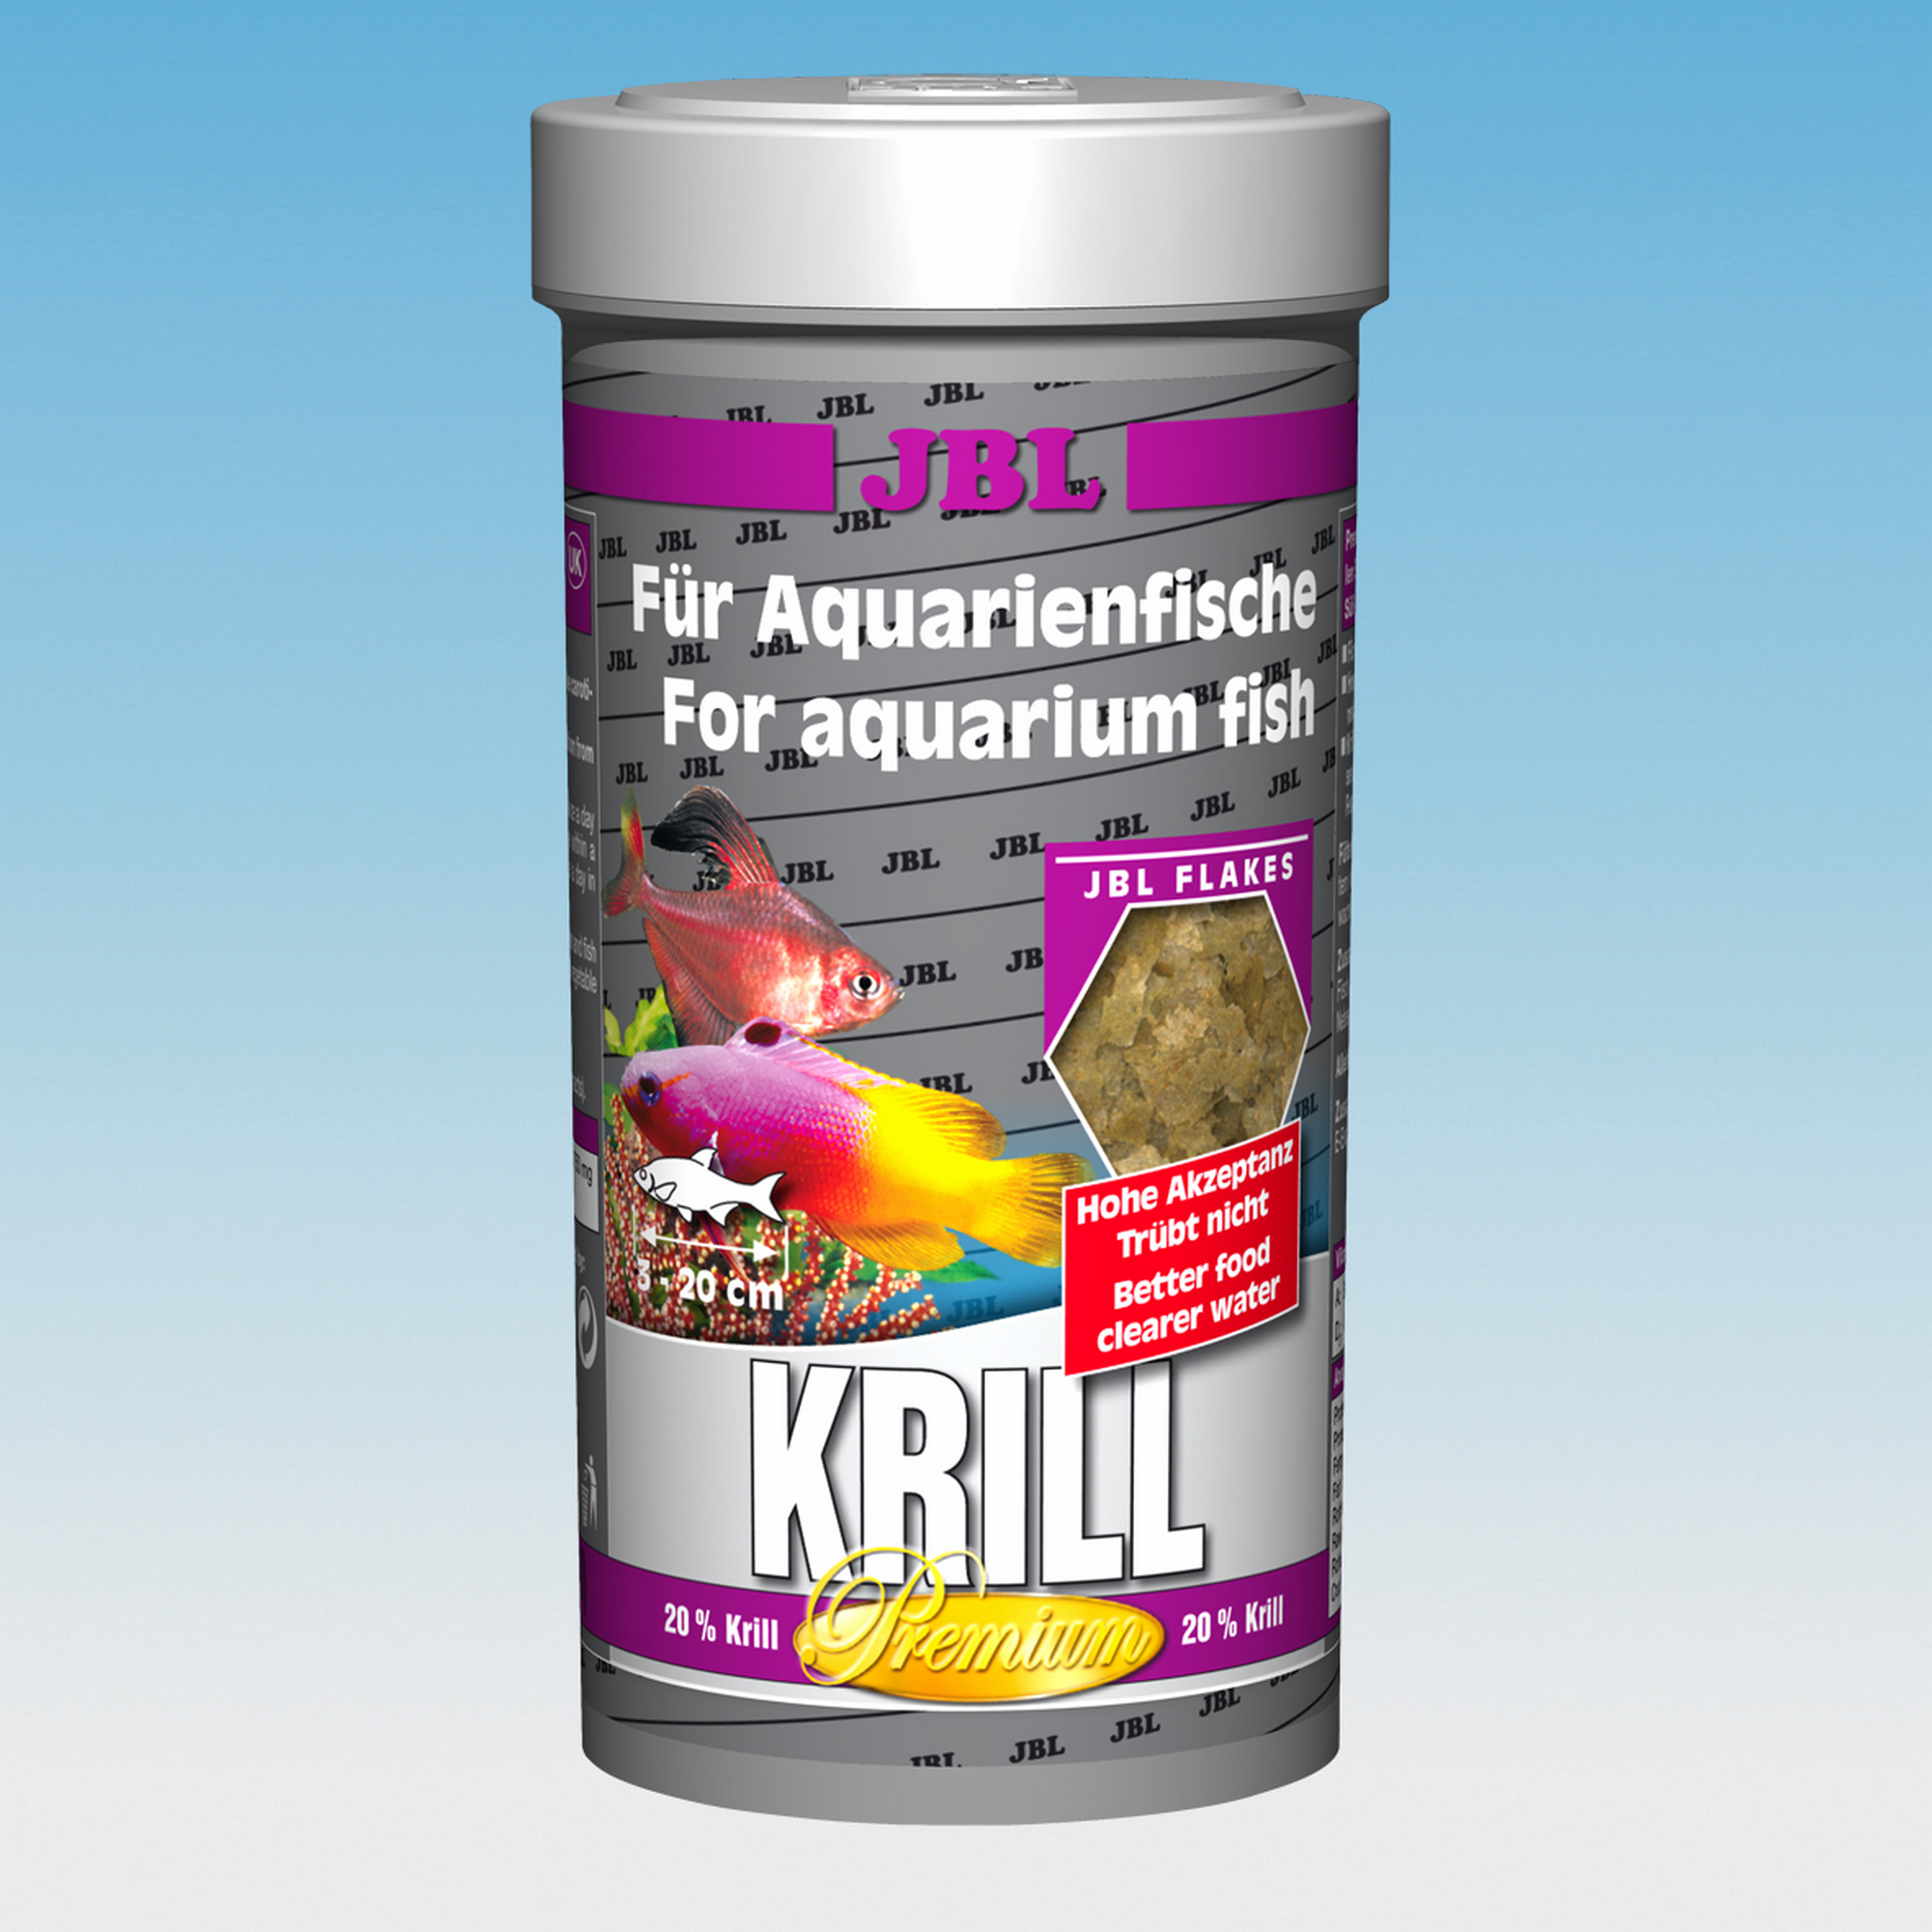 Krill Premium Für Aquarienfische 250 ml + product picture